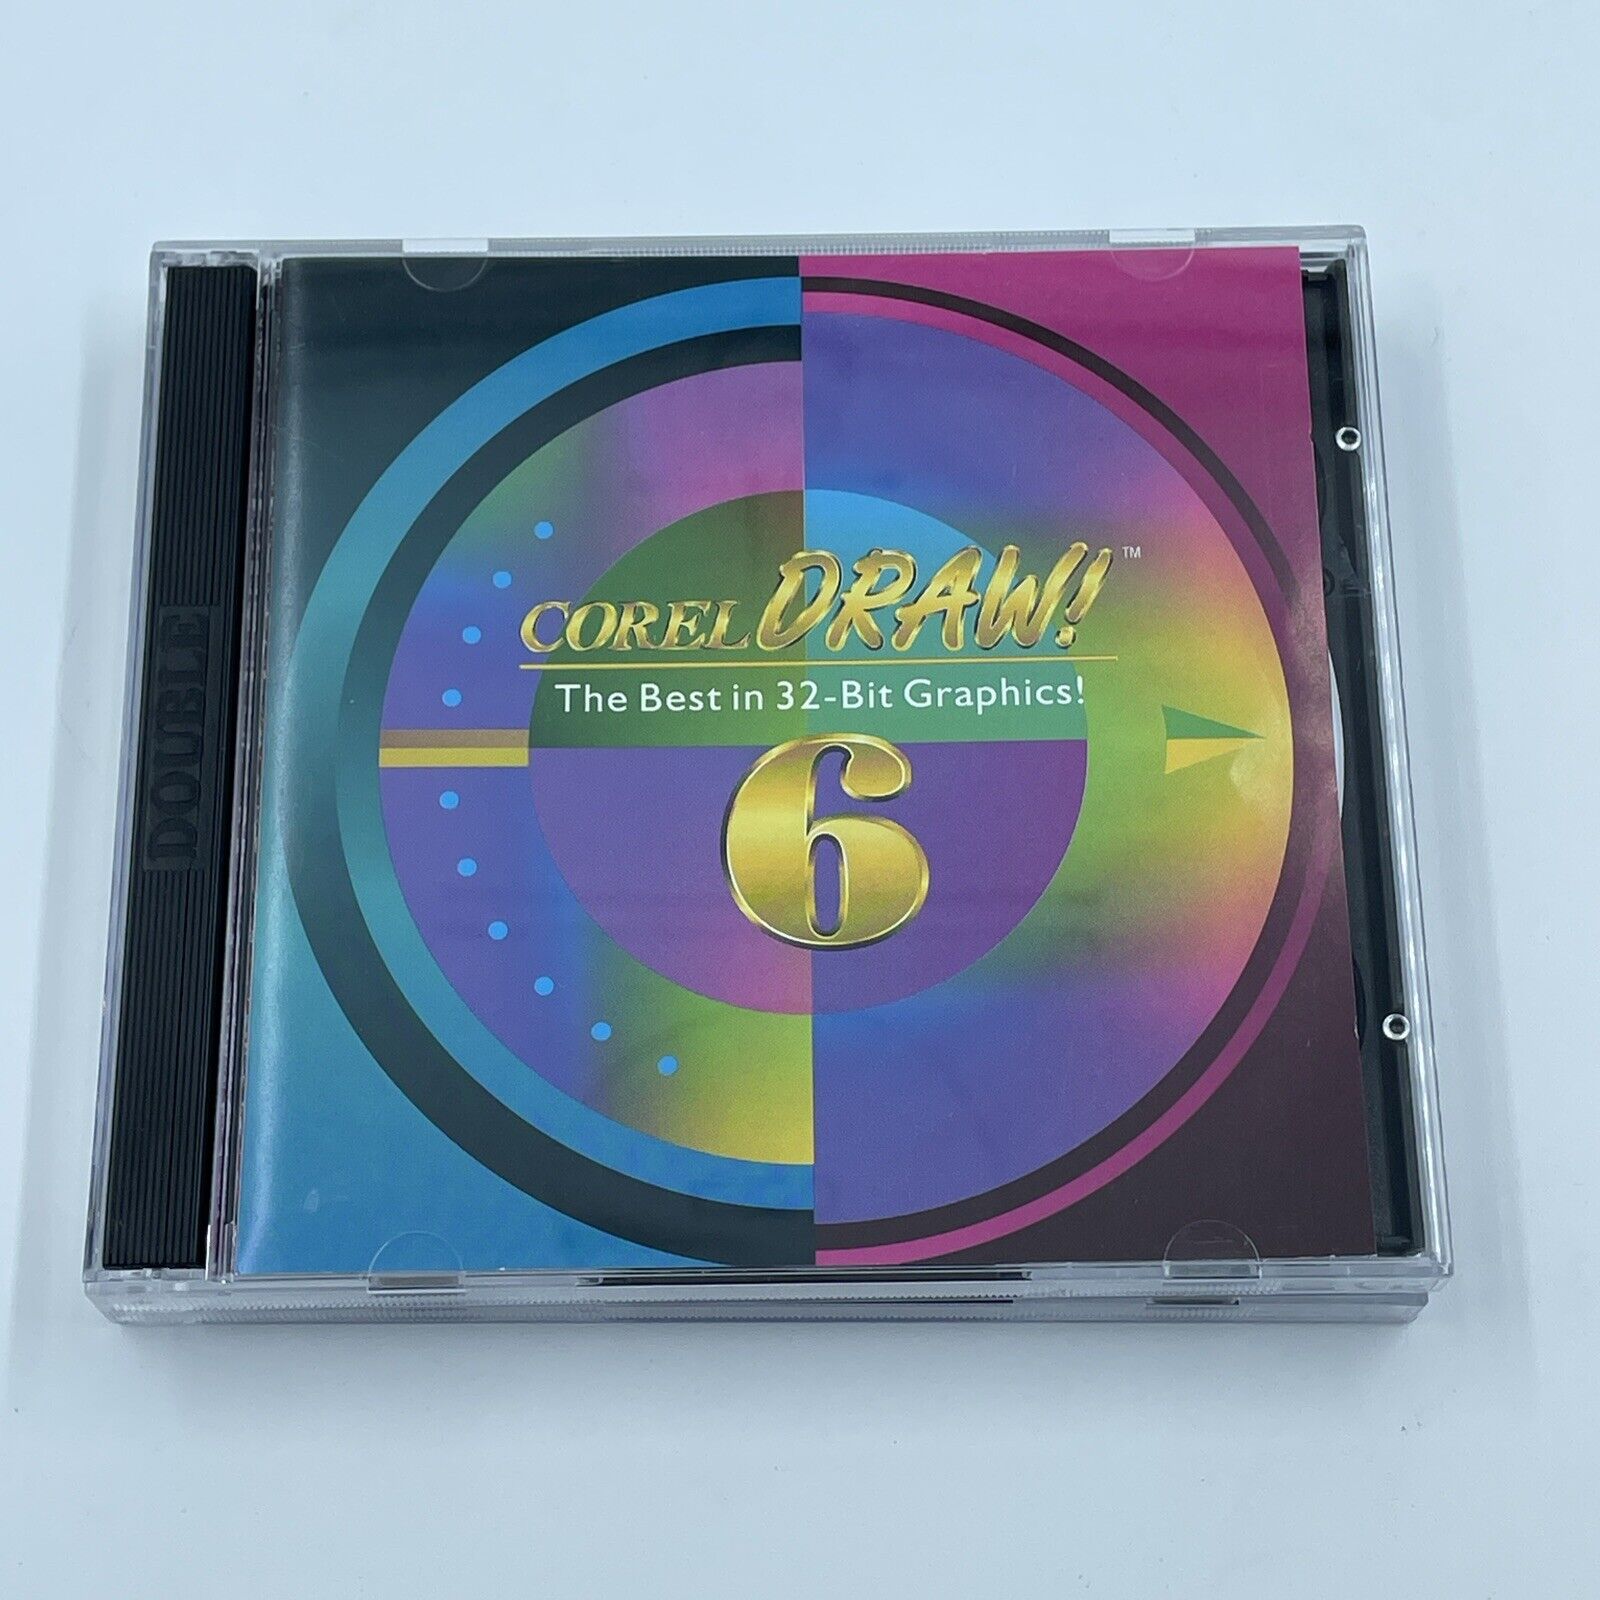 Vintage Corel Draw 6 Cd ROM The Best In 32-Bit Graphic 4 Discs Windows 95